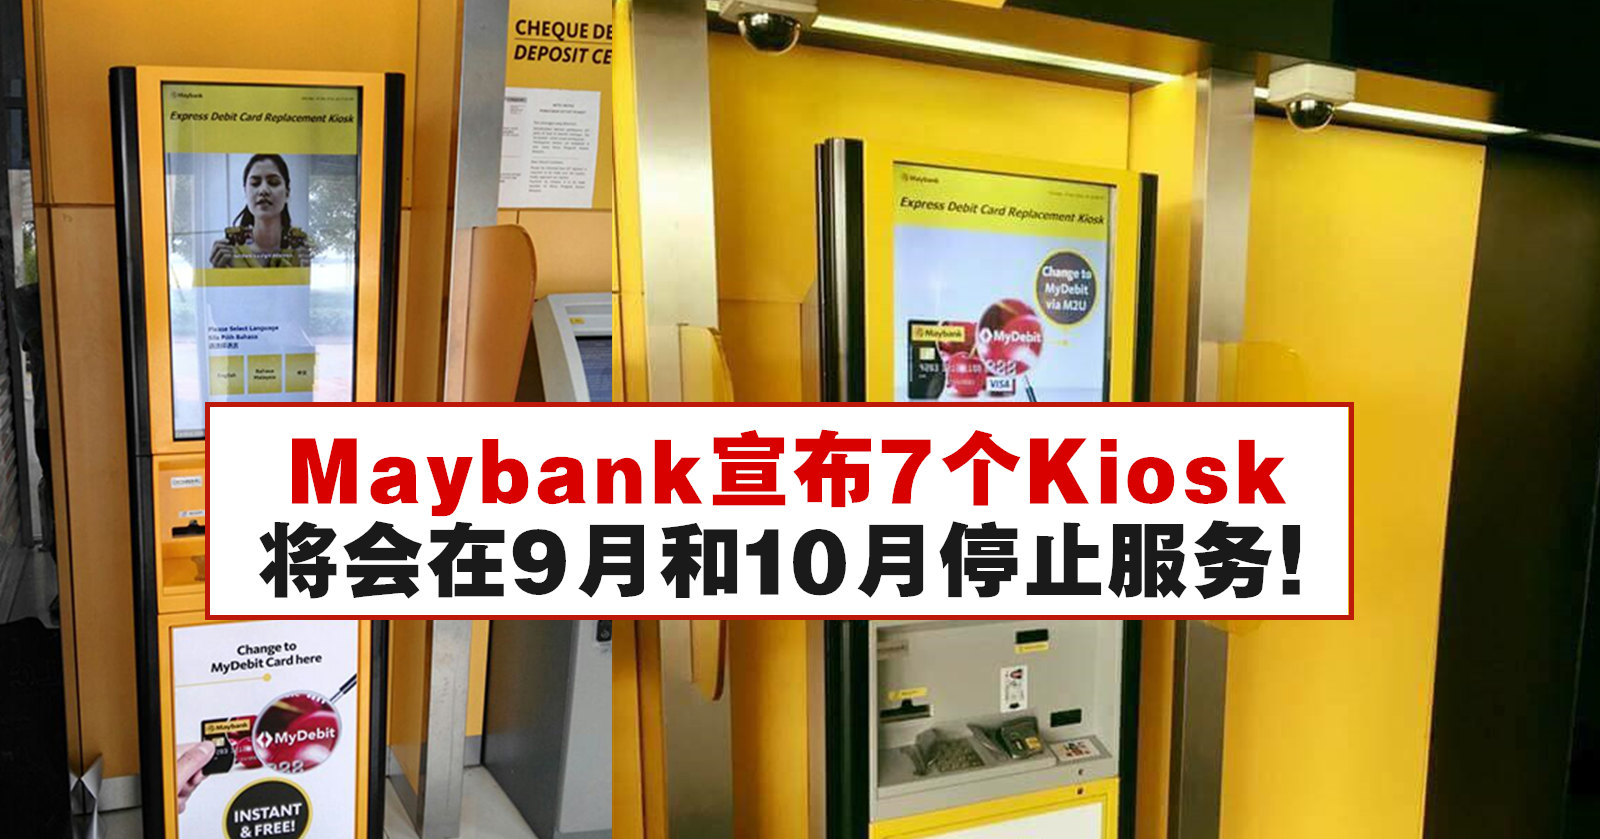 Maybank debit card replacement kiosk